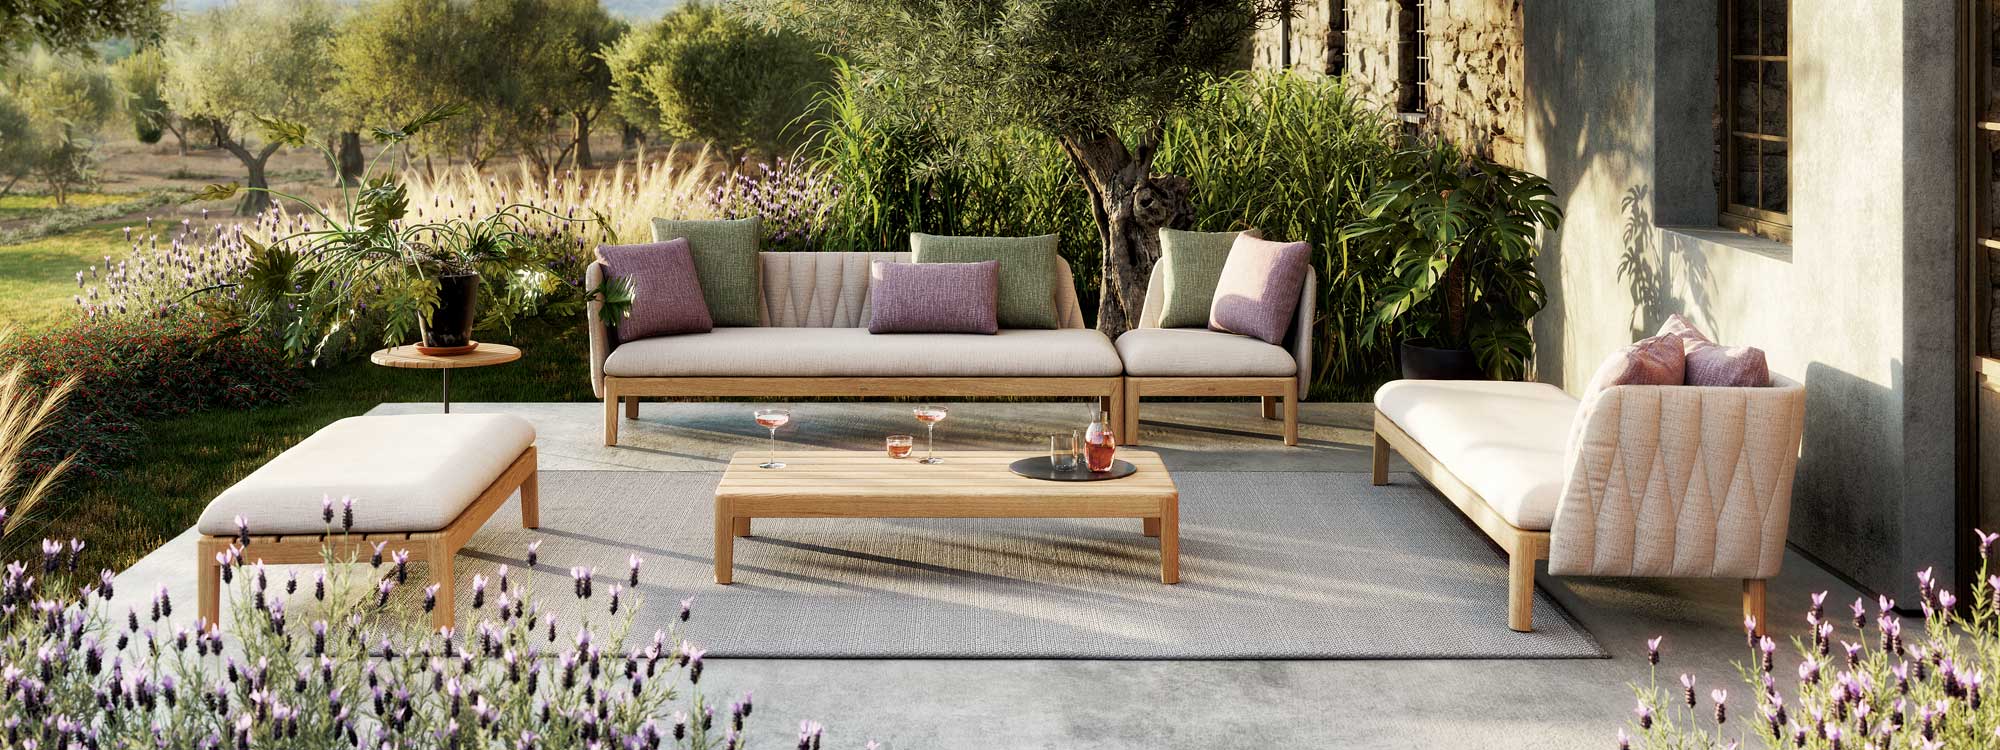 Calypso modular garden sofa is modern teak lounge furniture in finest quality garden furniture materials by Royal Botania furniture